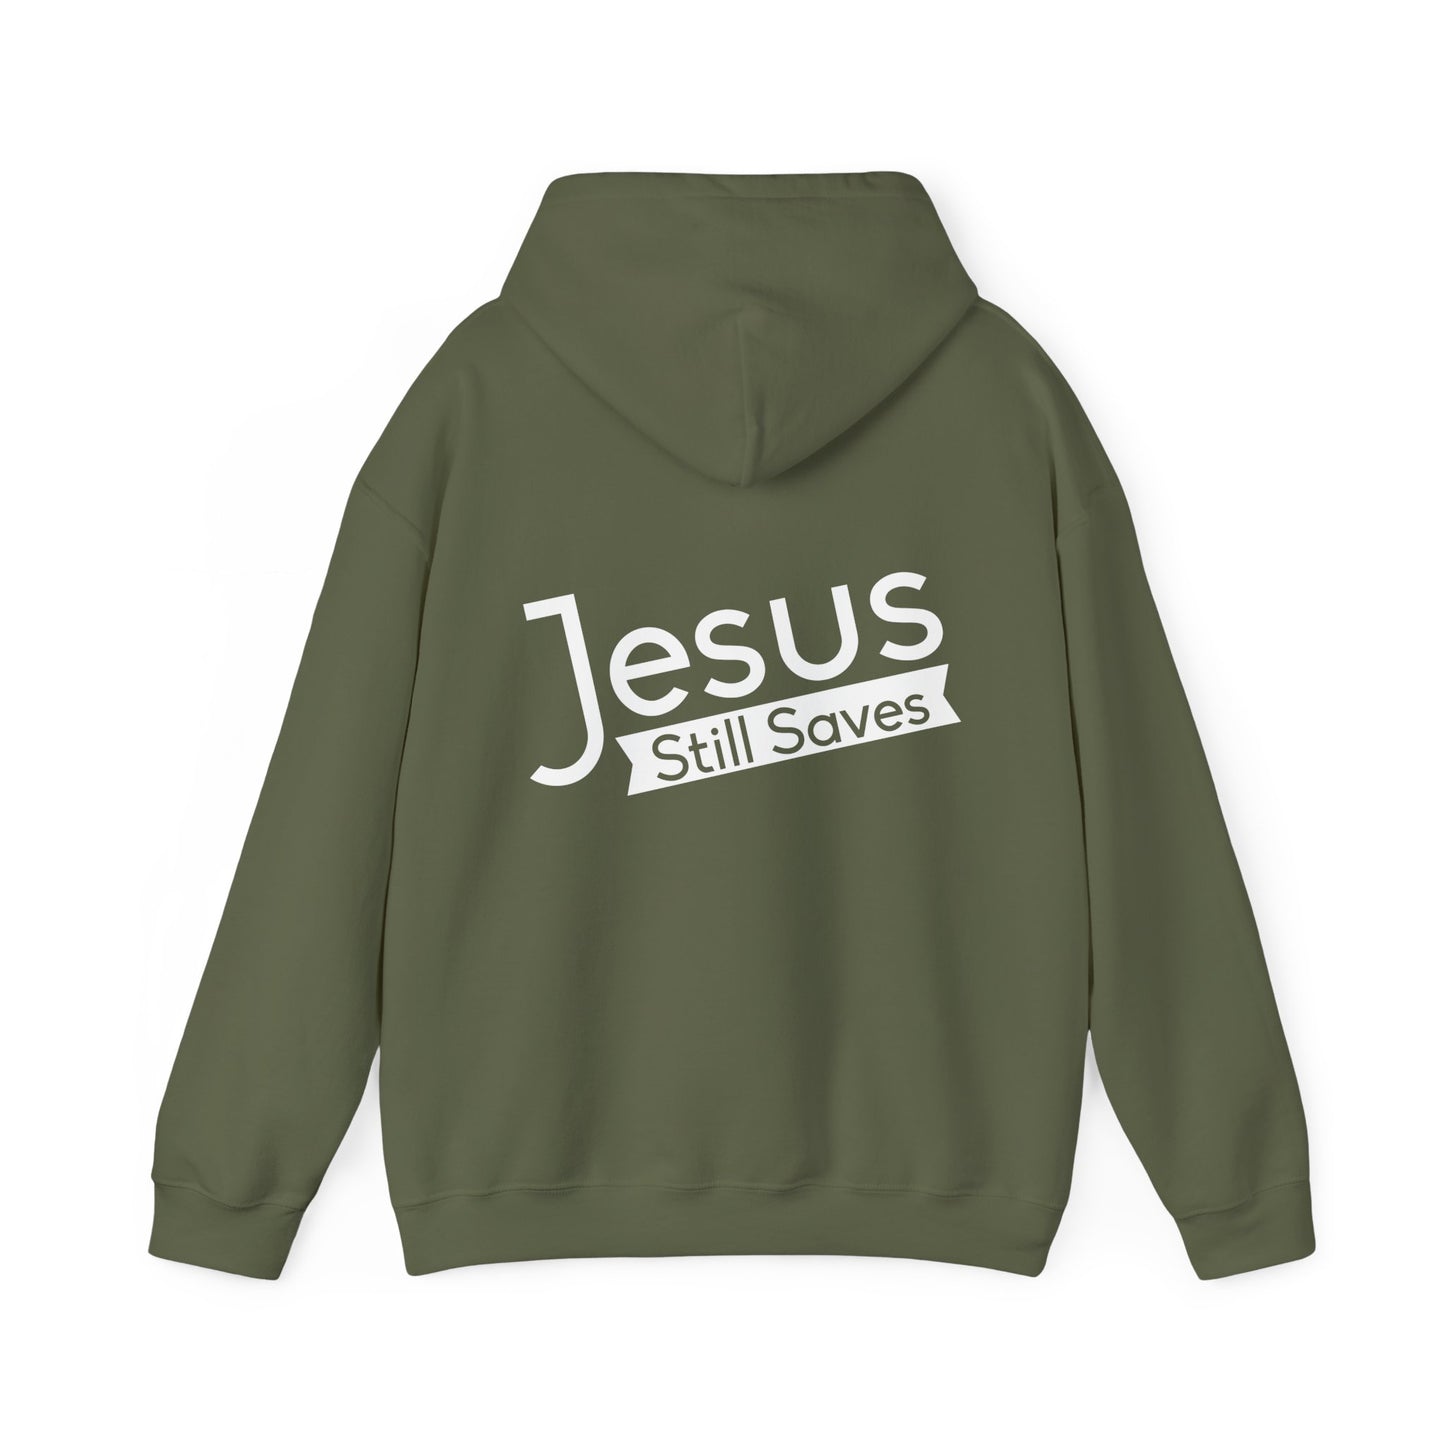 Raising Kids And Trusting God Women's Christian Hooded Pullover Sweatshirt